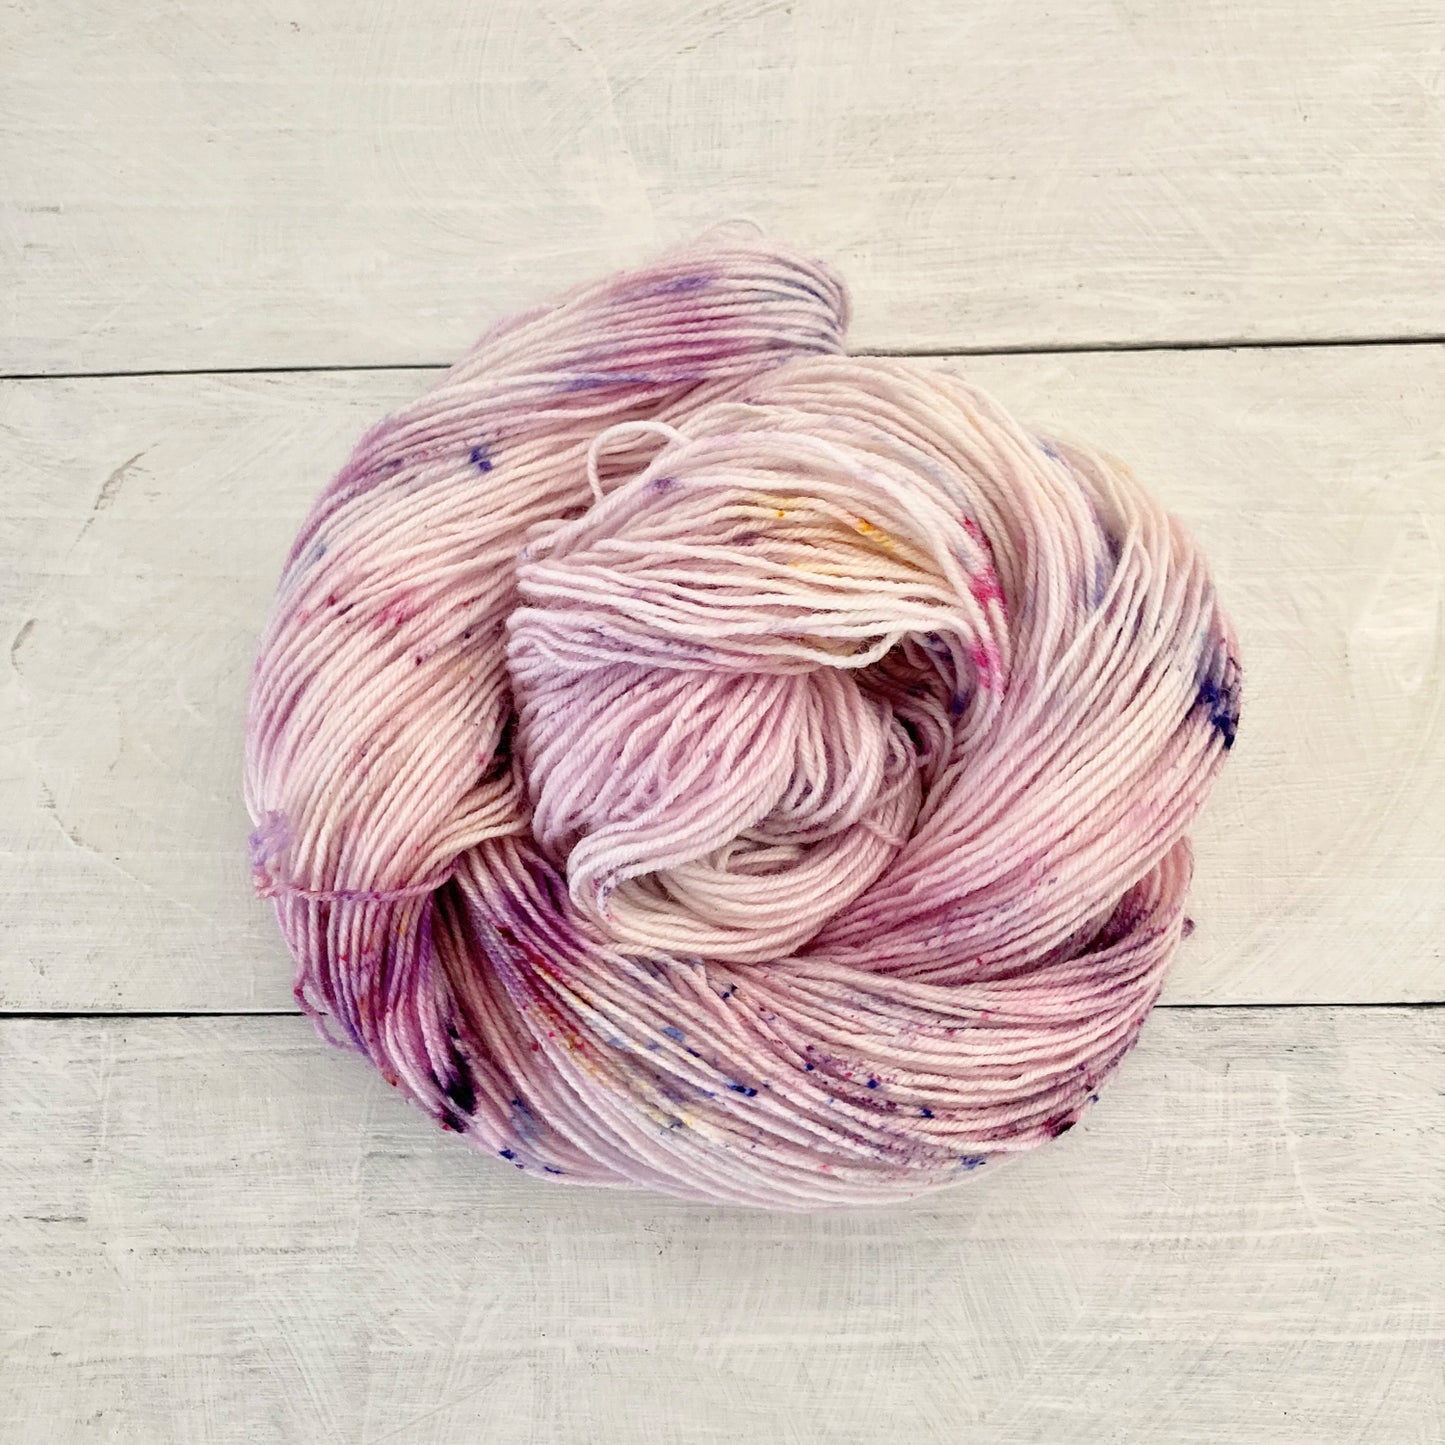 Hand-dyed yarn No.231 sock yarn "Le temps des lilas"